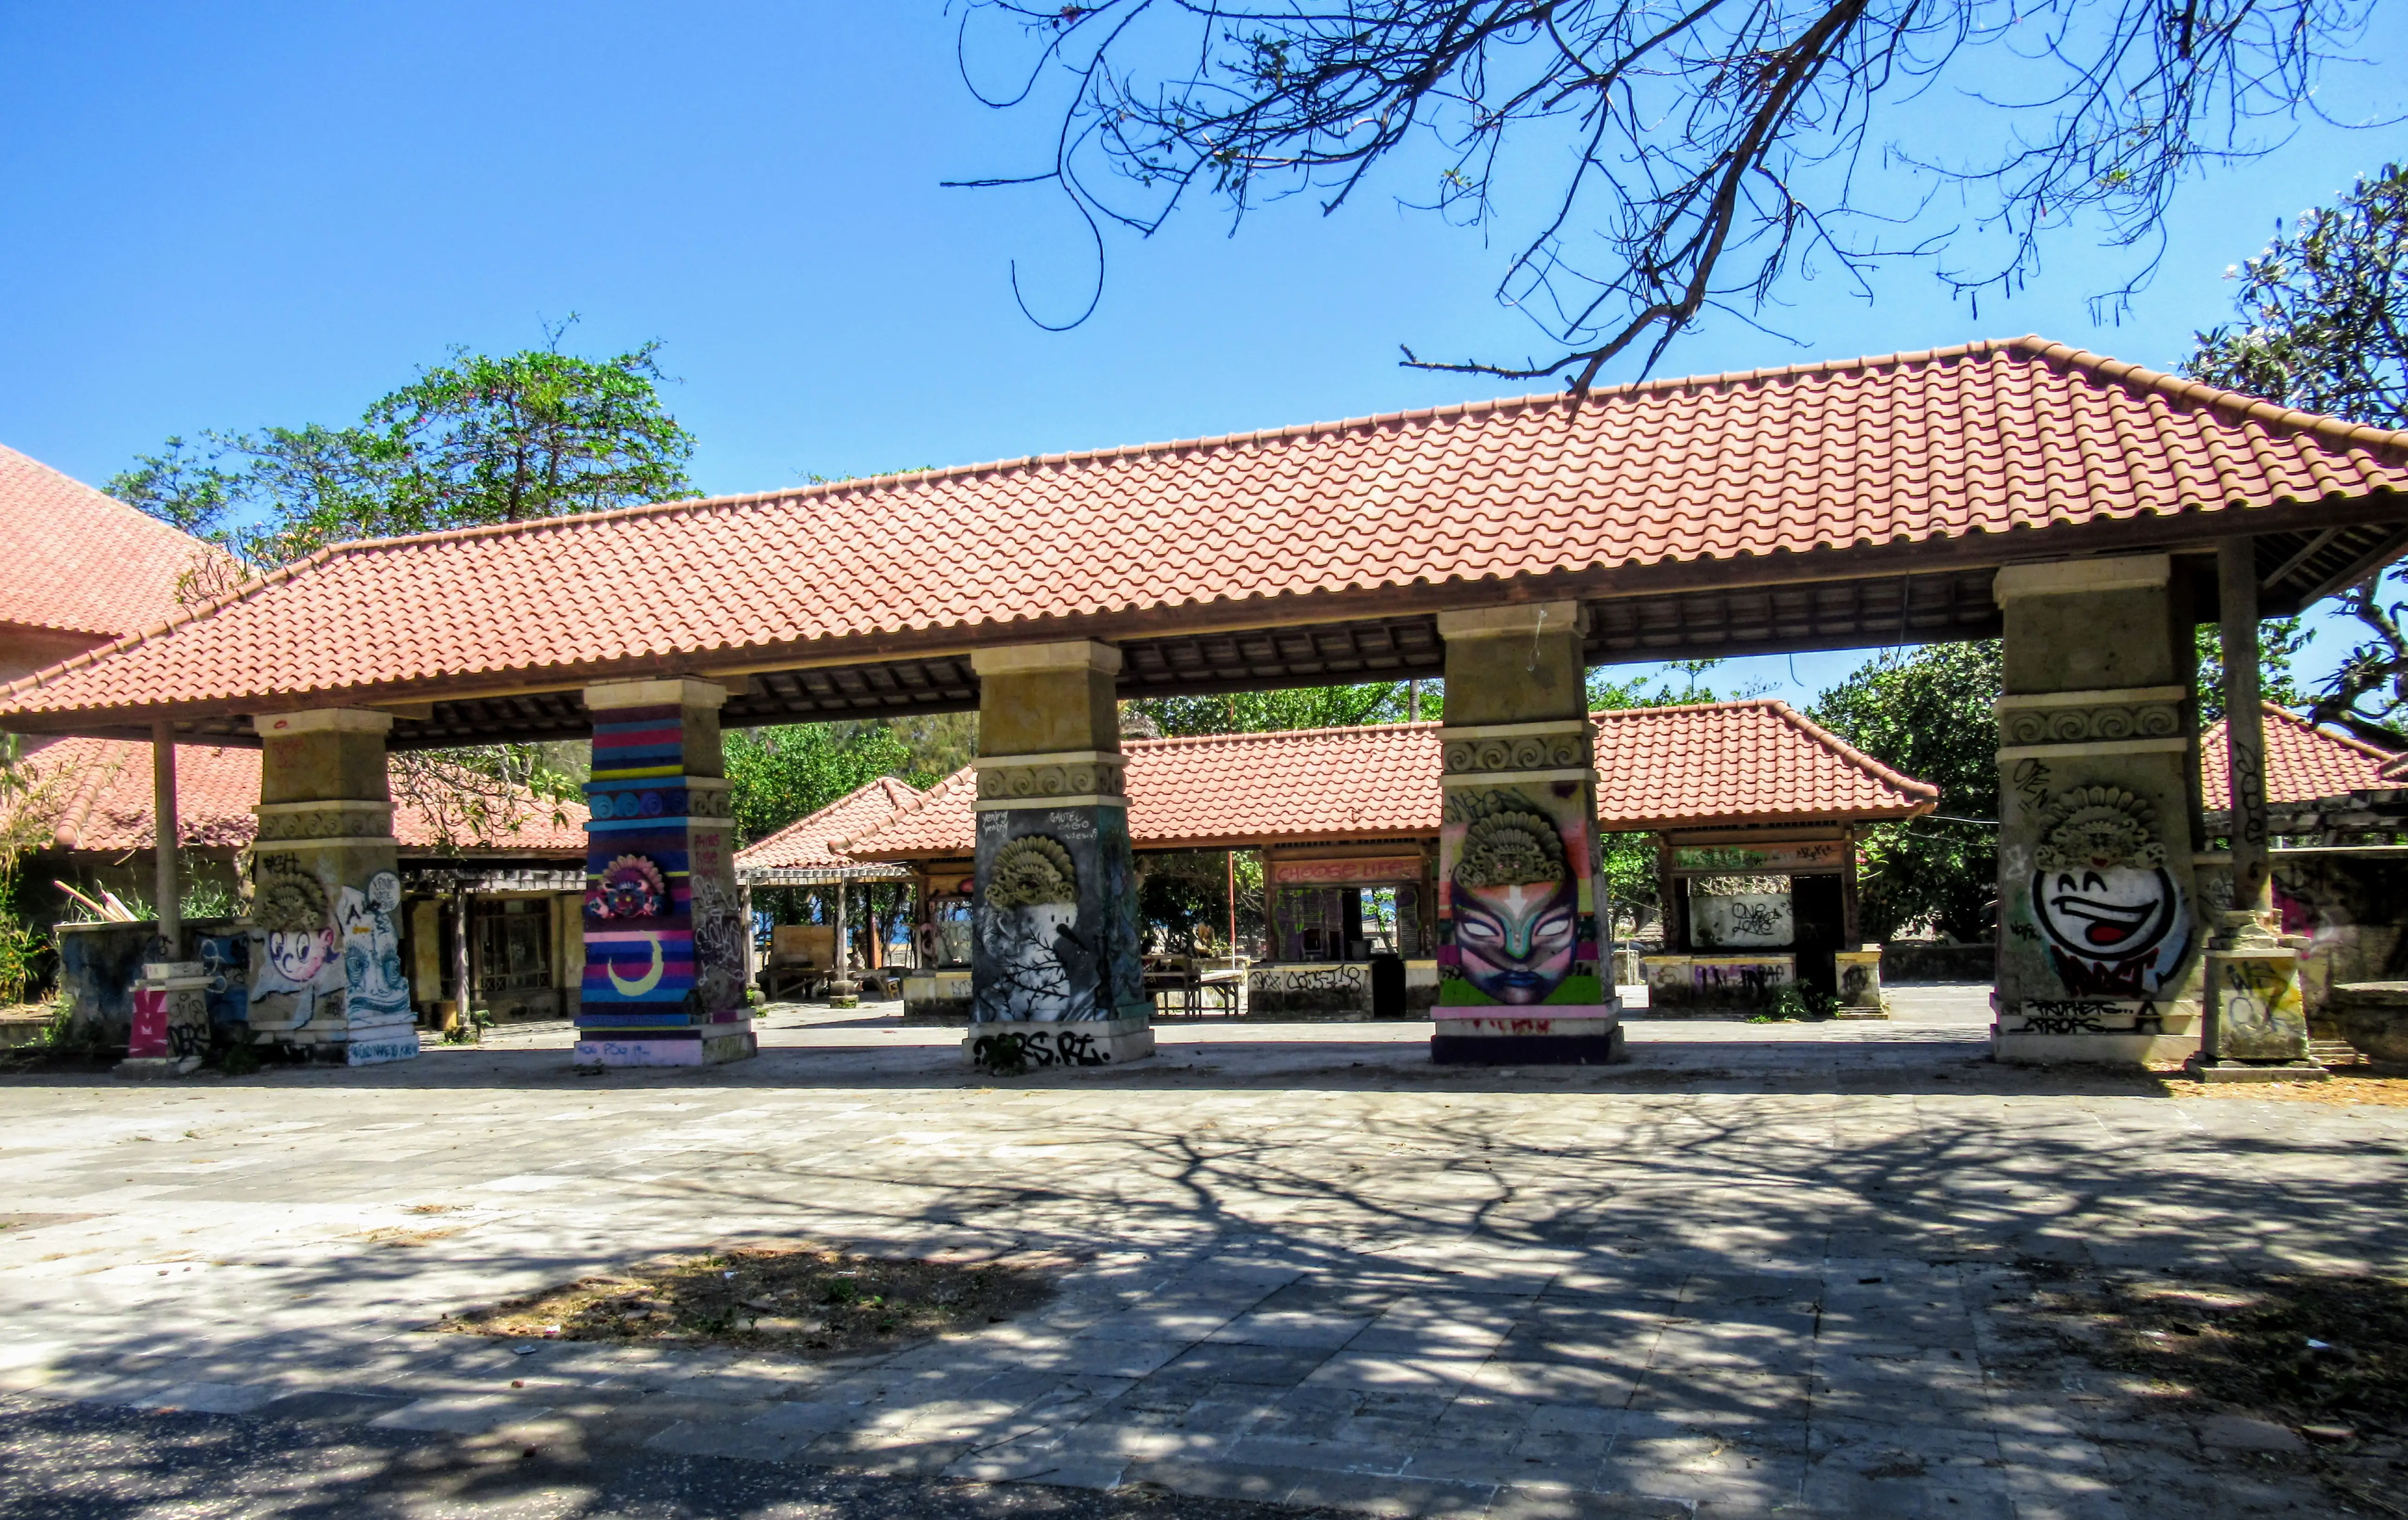 Entrance to Taman Festival theme park, Bali